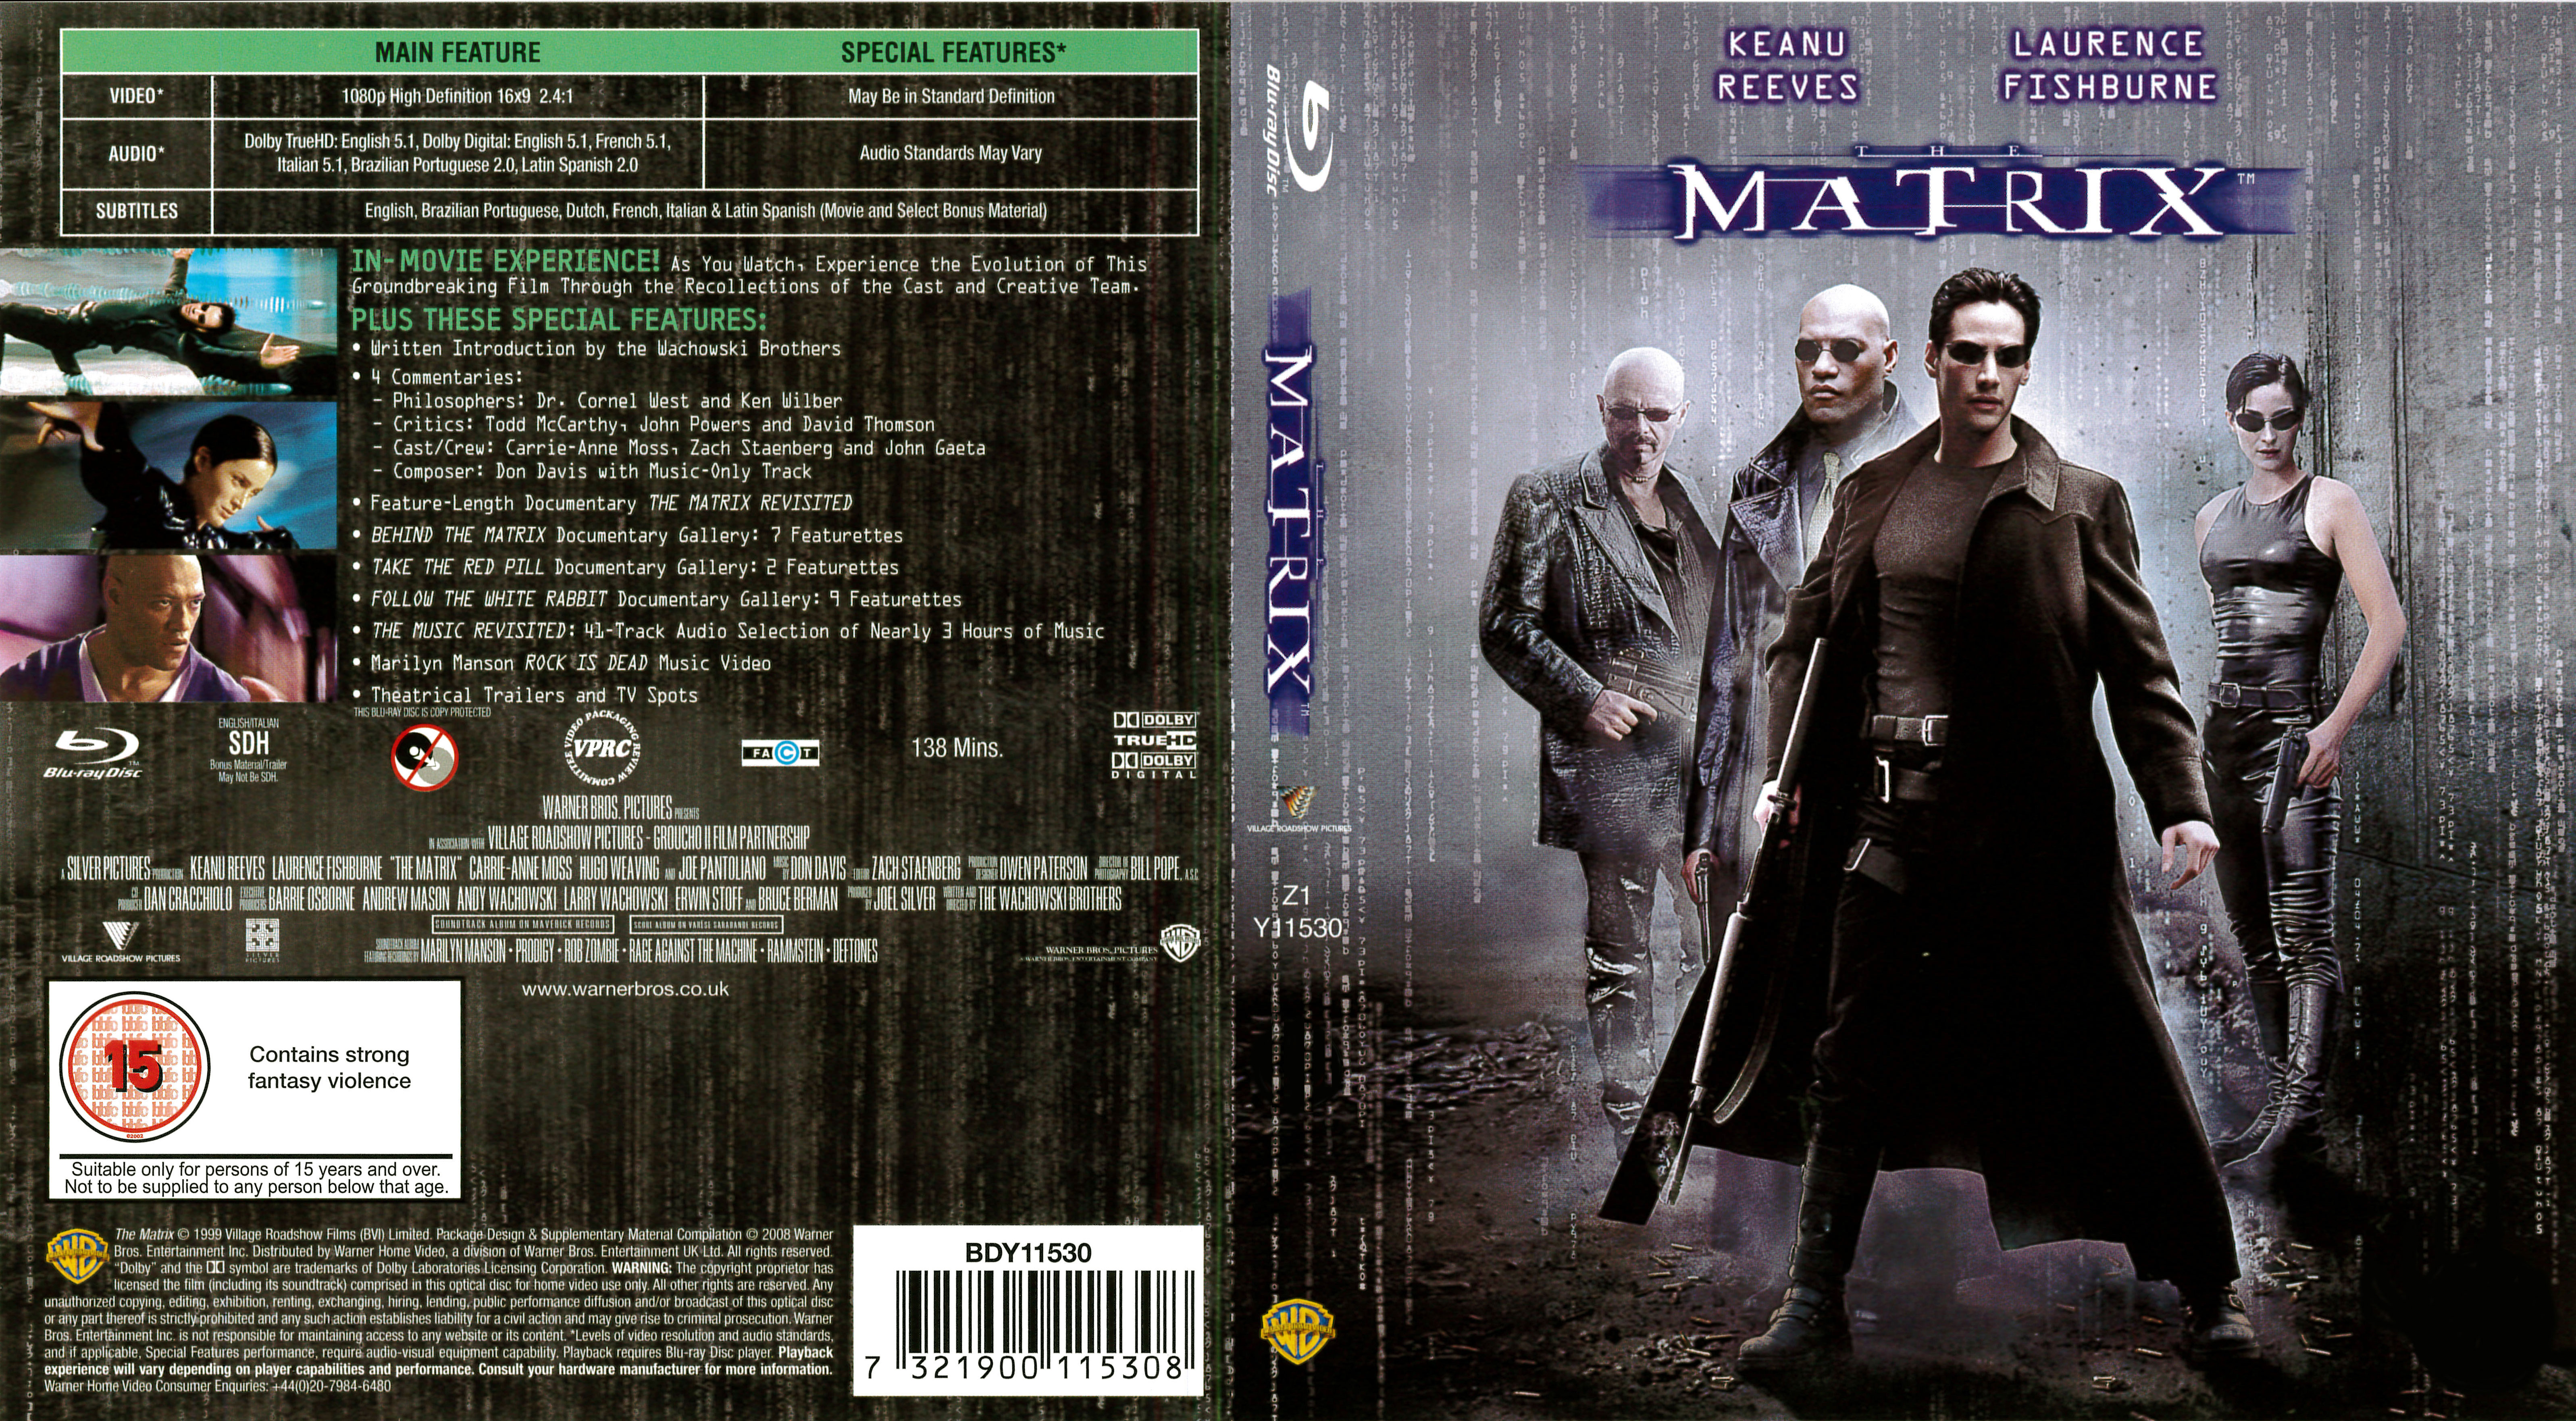 Jaquette DVD Matrix (BLU RAY) v2